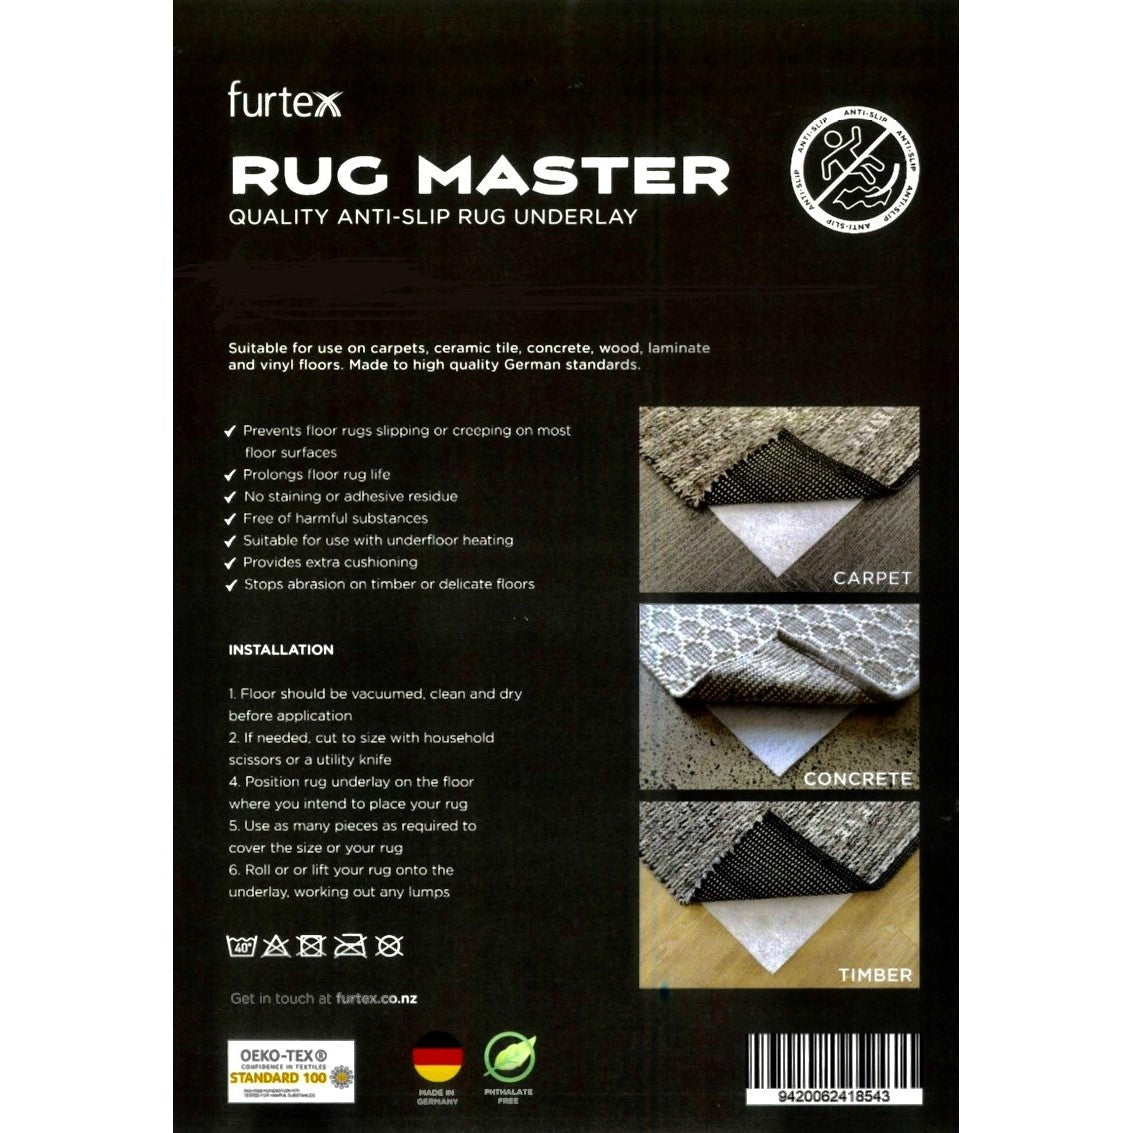 Rug Master Anti-Slip Rug Underlay from Baya Furtex Stockist Make Your House A Home, Furniture Store Bendigo. Free Australia Wide Delivery. Mulberi Rugs.